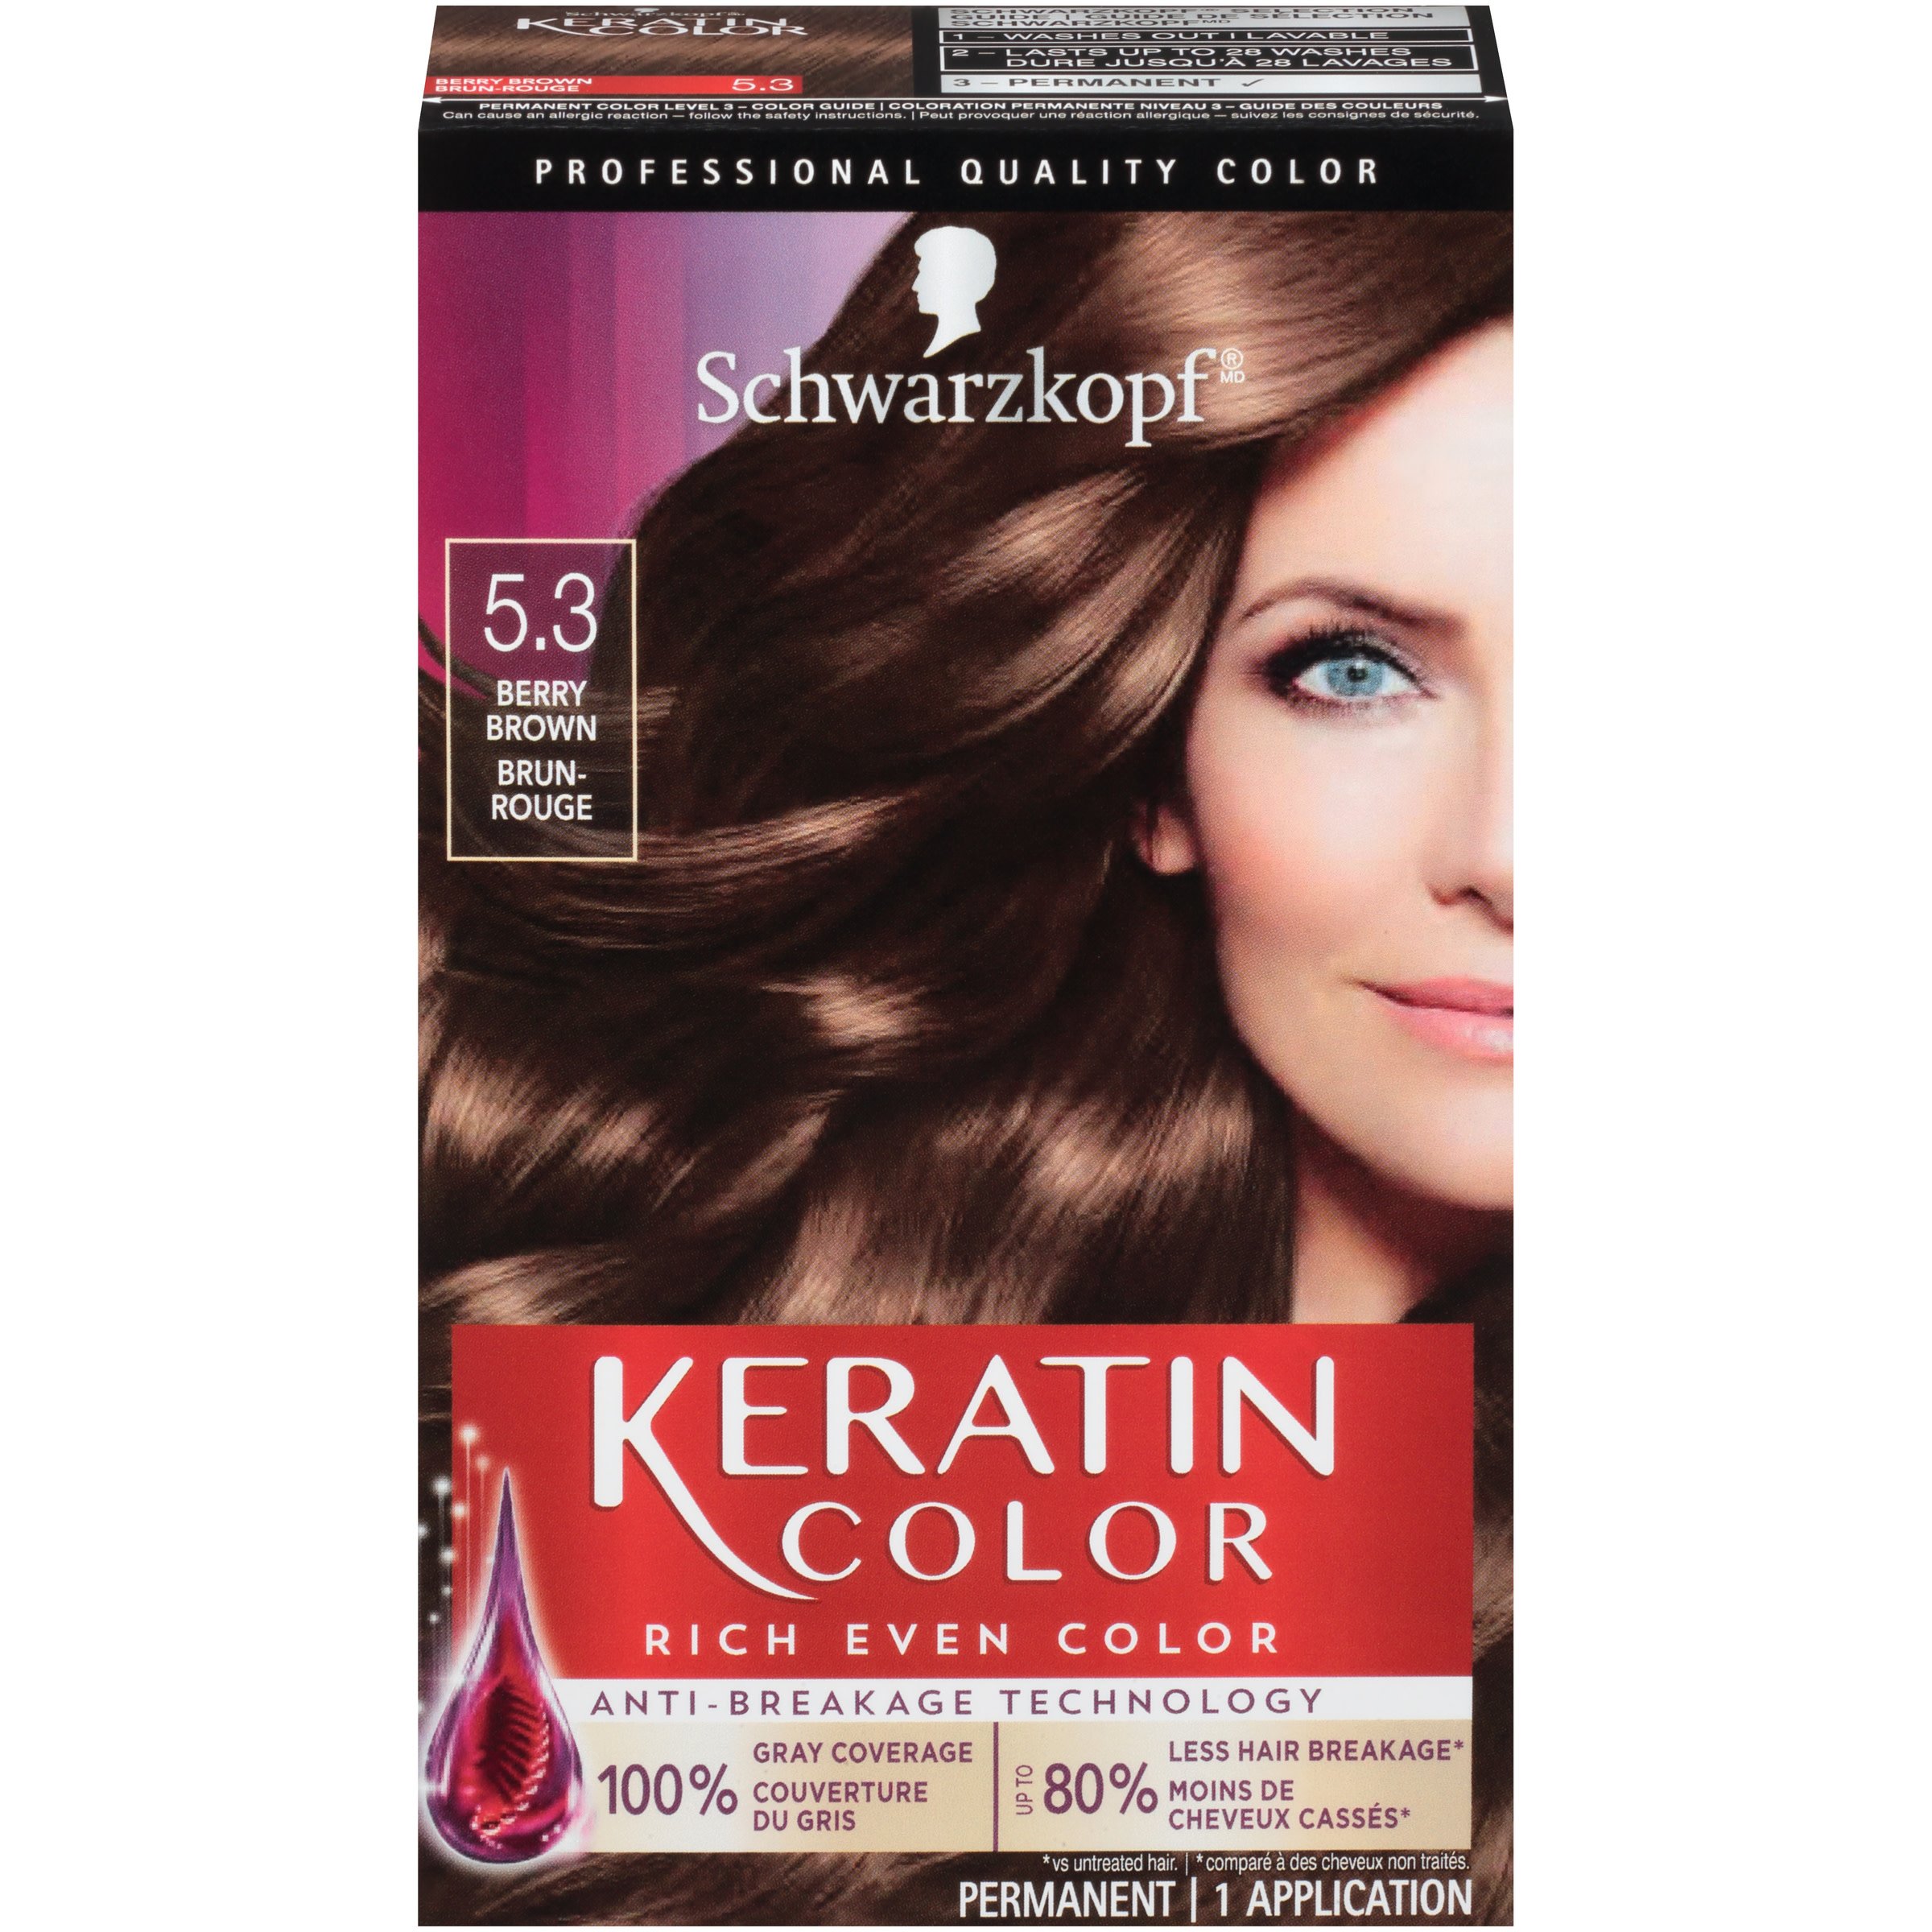 Schwarzkopf Keratin Color Permanent Hair Color Cream,  Berry Brown -  Shop Hair Color at H-E-B